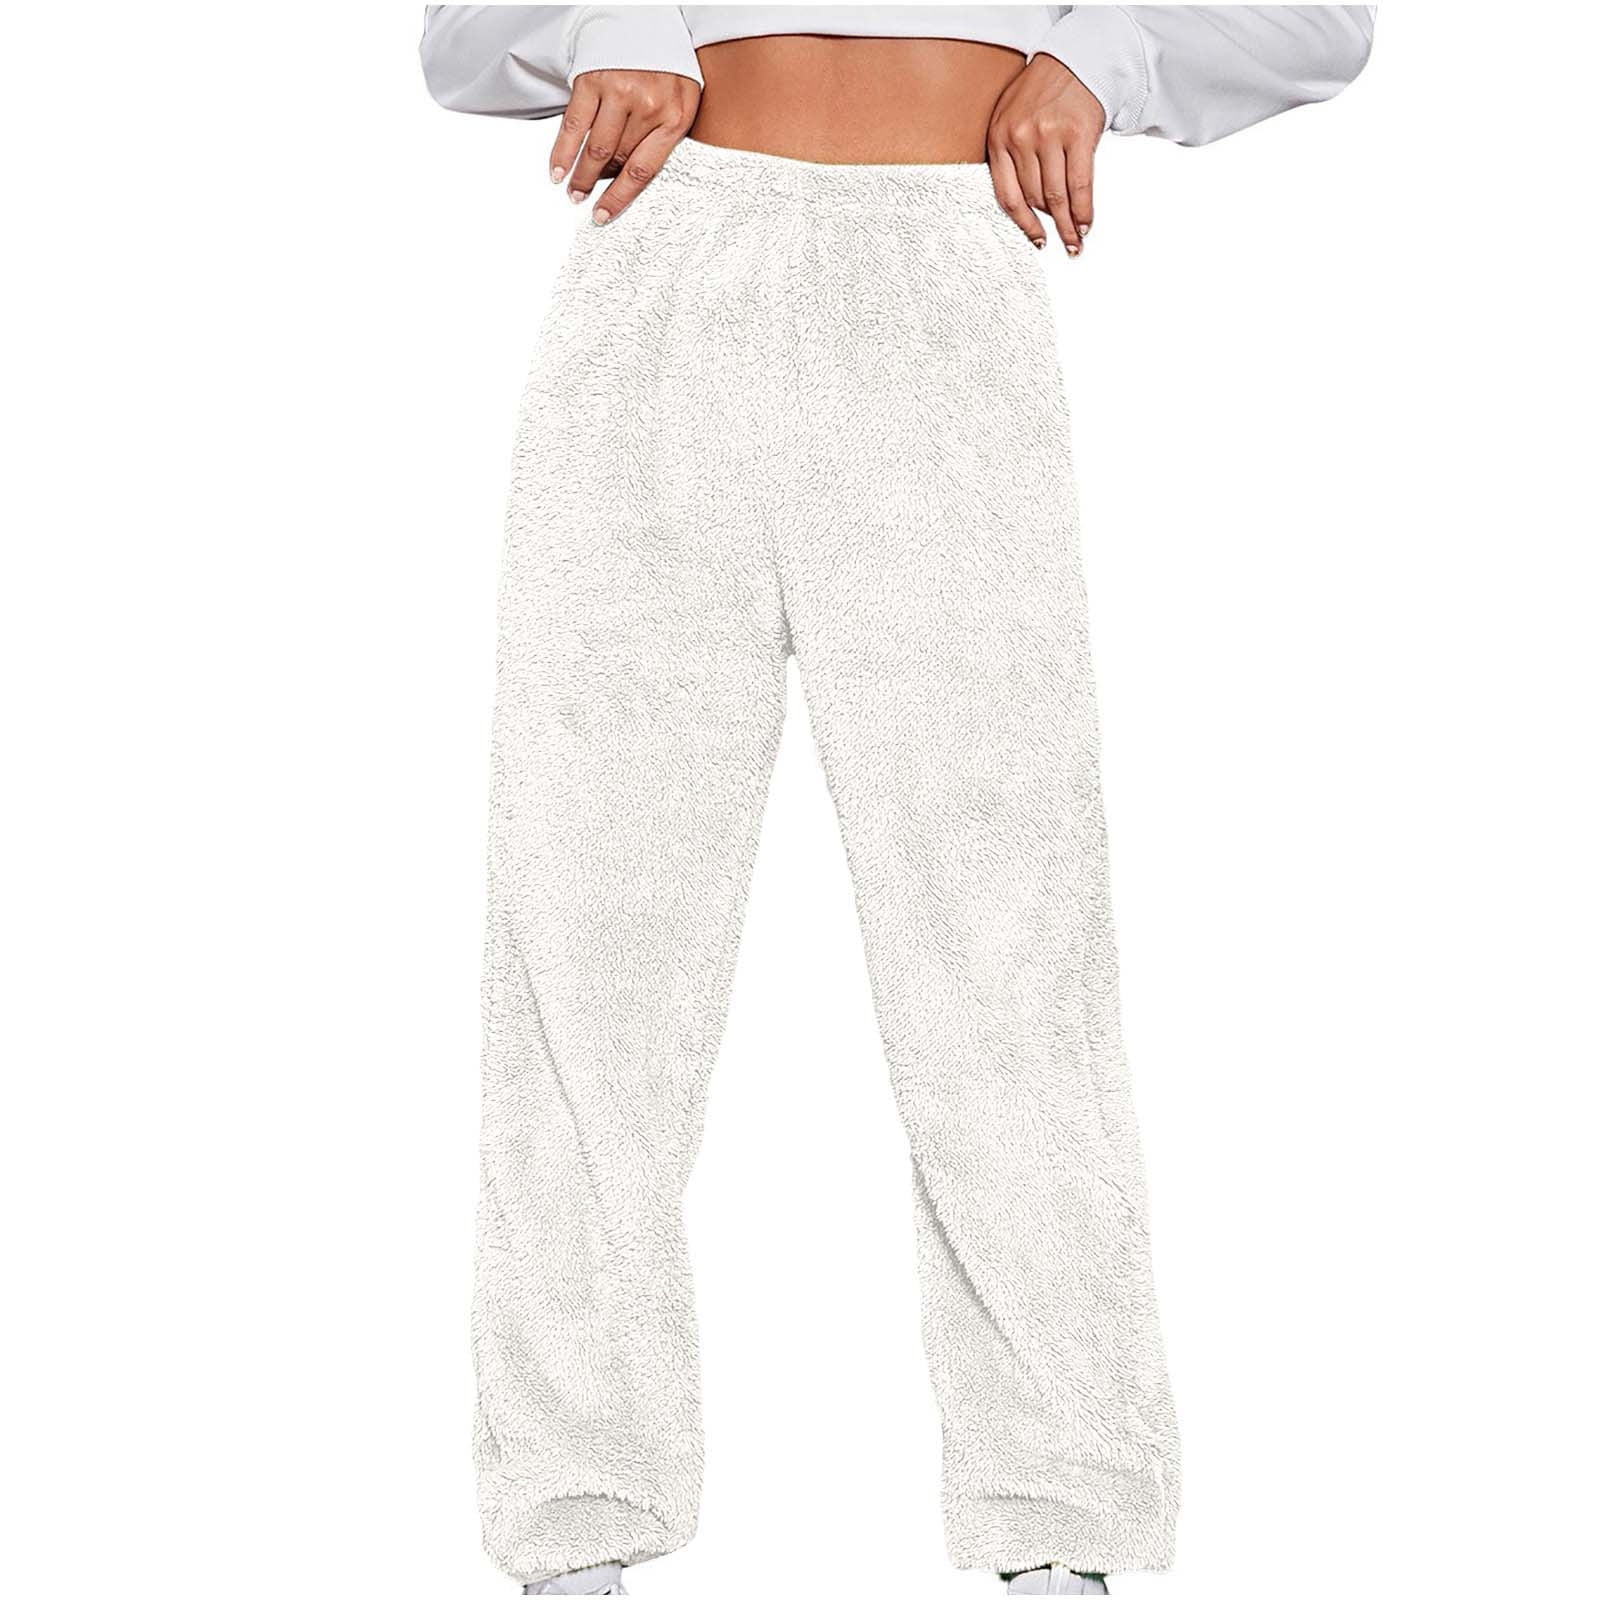 Hfyihgf Womens Fuzzy Fleece Pants Winter Warm Thicken Jogger Athletic  Sweatpants for Ladies Comfy Soft Plush Pajama Pants Plus Size(White,XL)